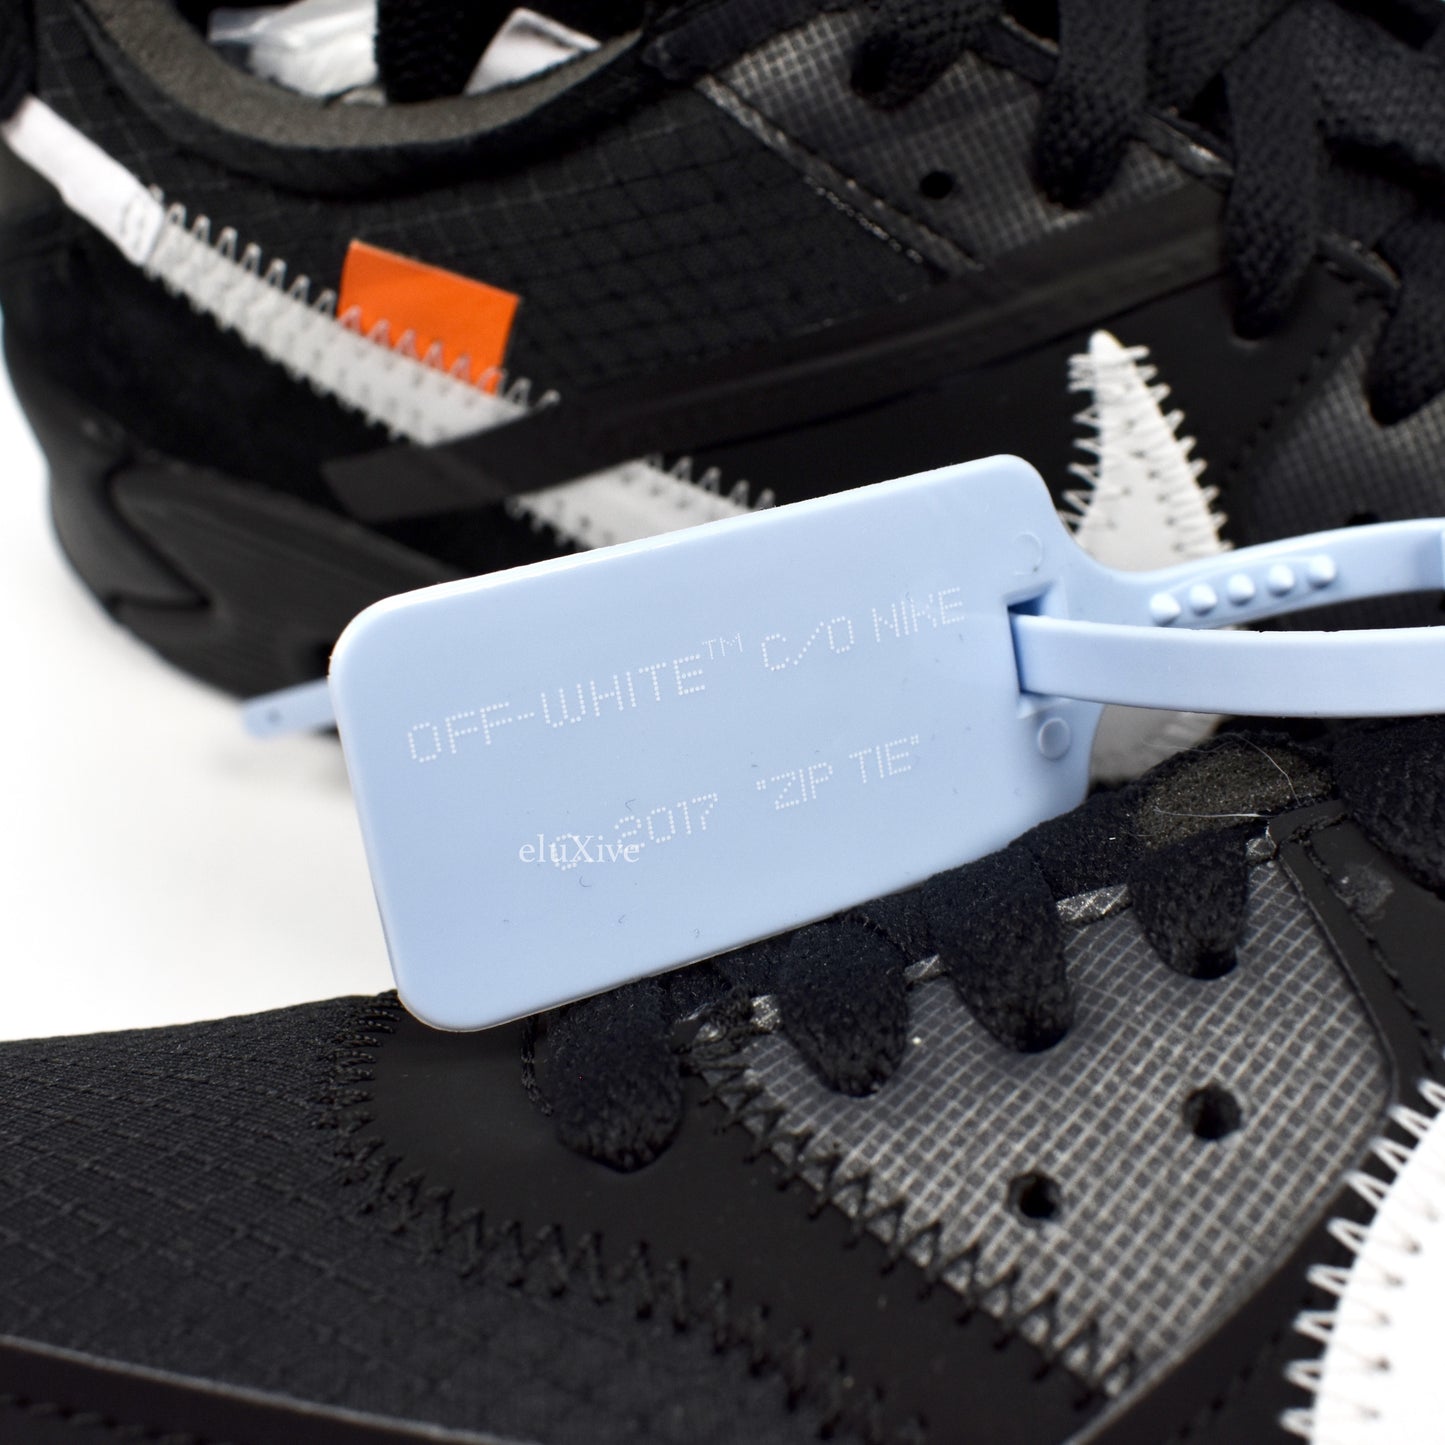 Nike x Off-White - Air Max 90 Black